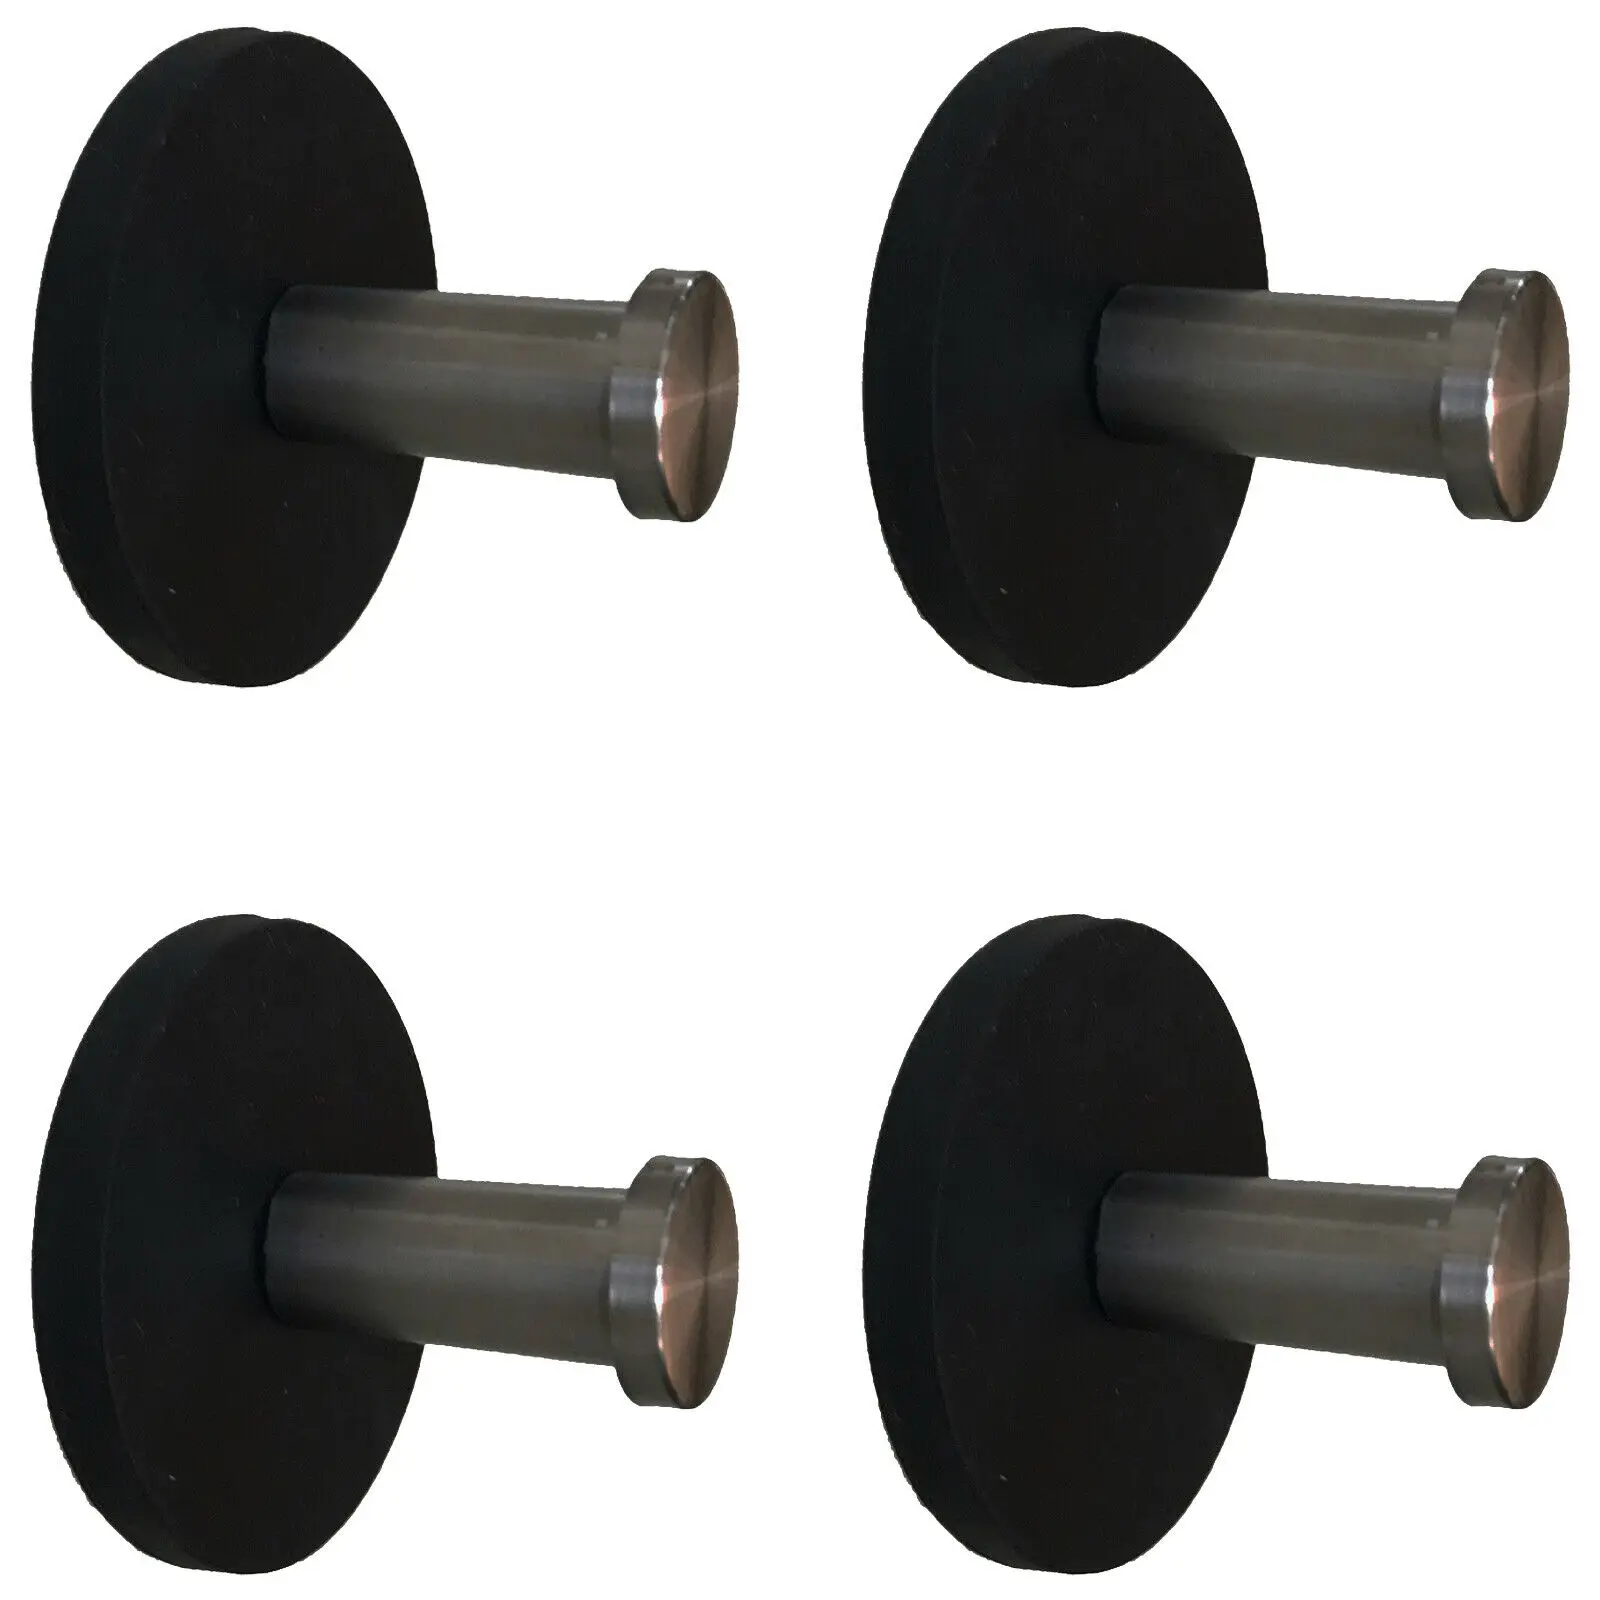 4x Large Strong Fridge Magnets Holder Hooks Magnetic Crafts Whiteboard Push Pins 